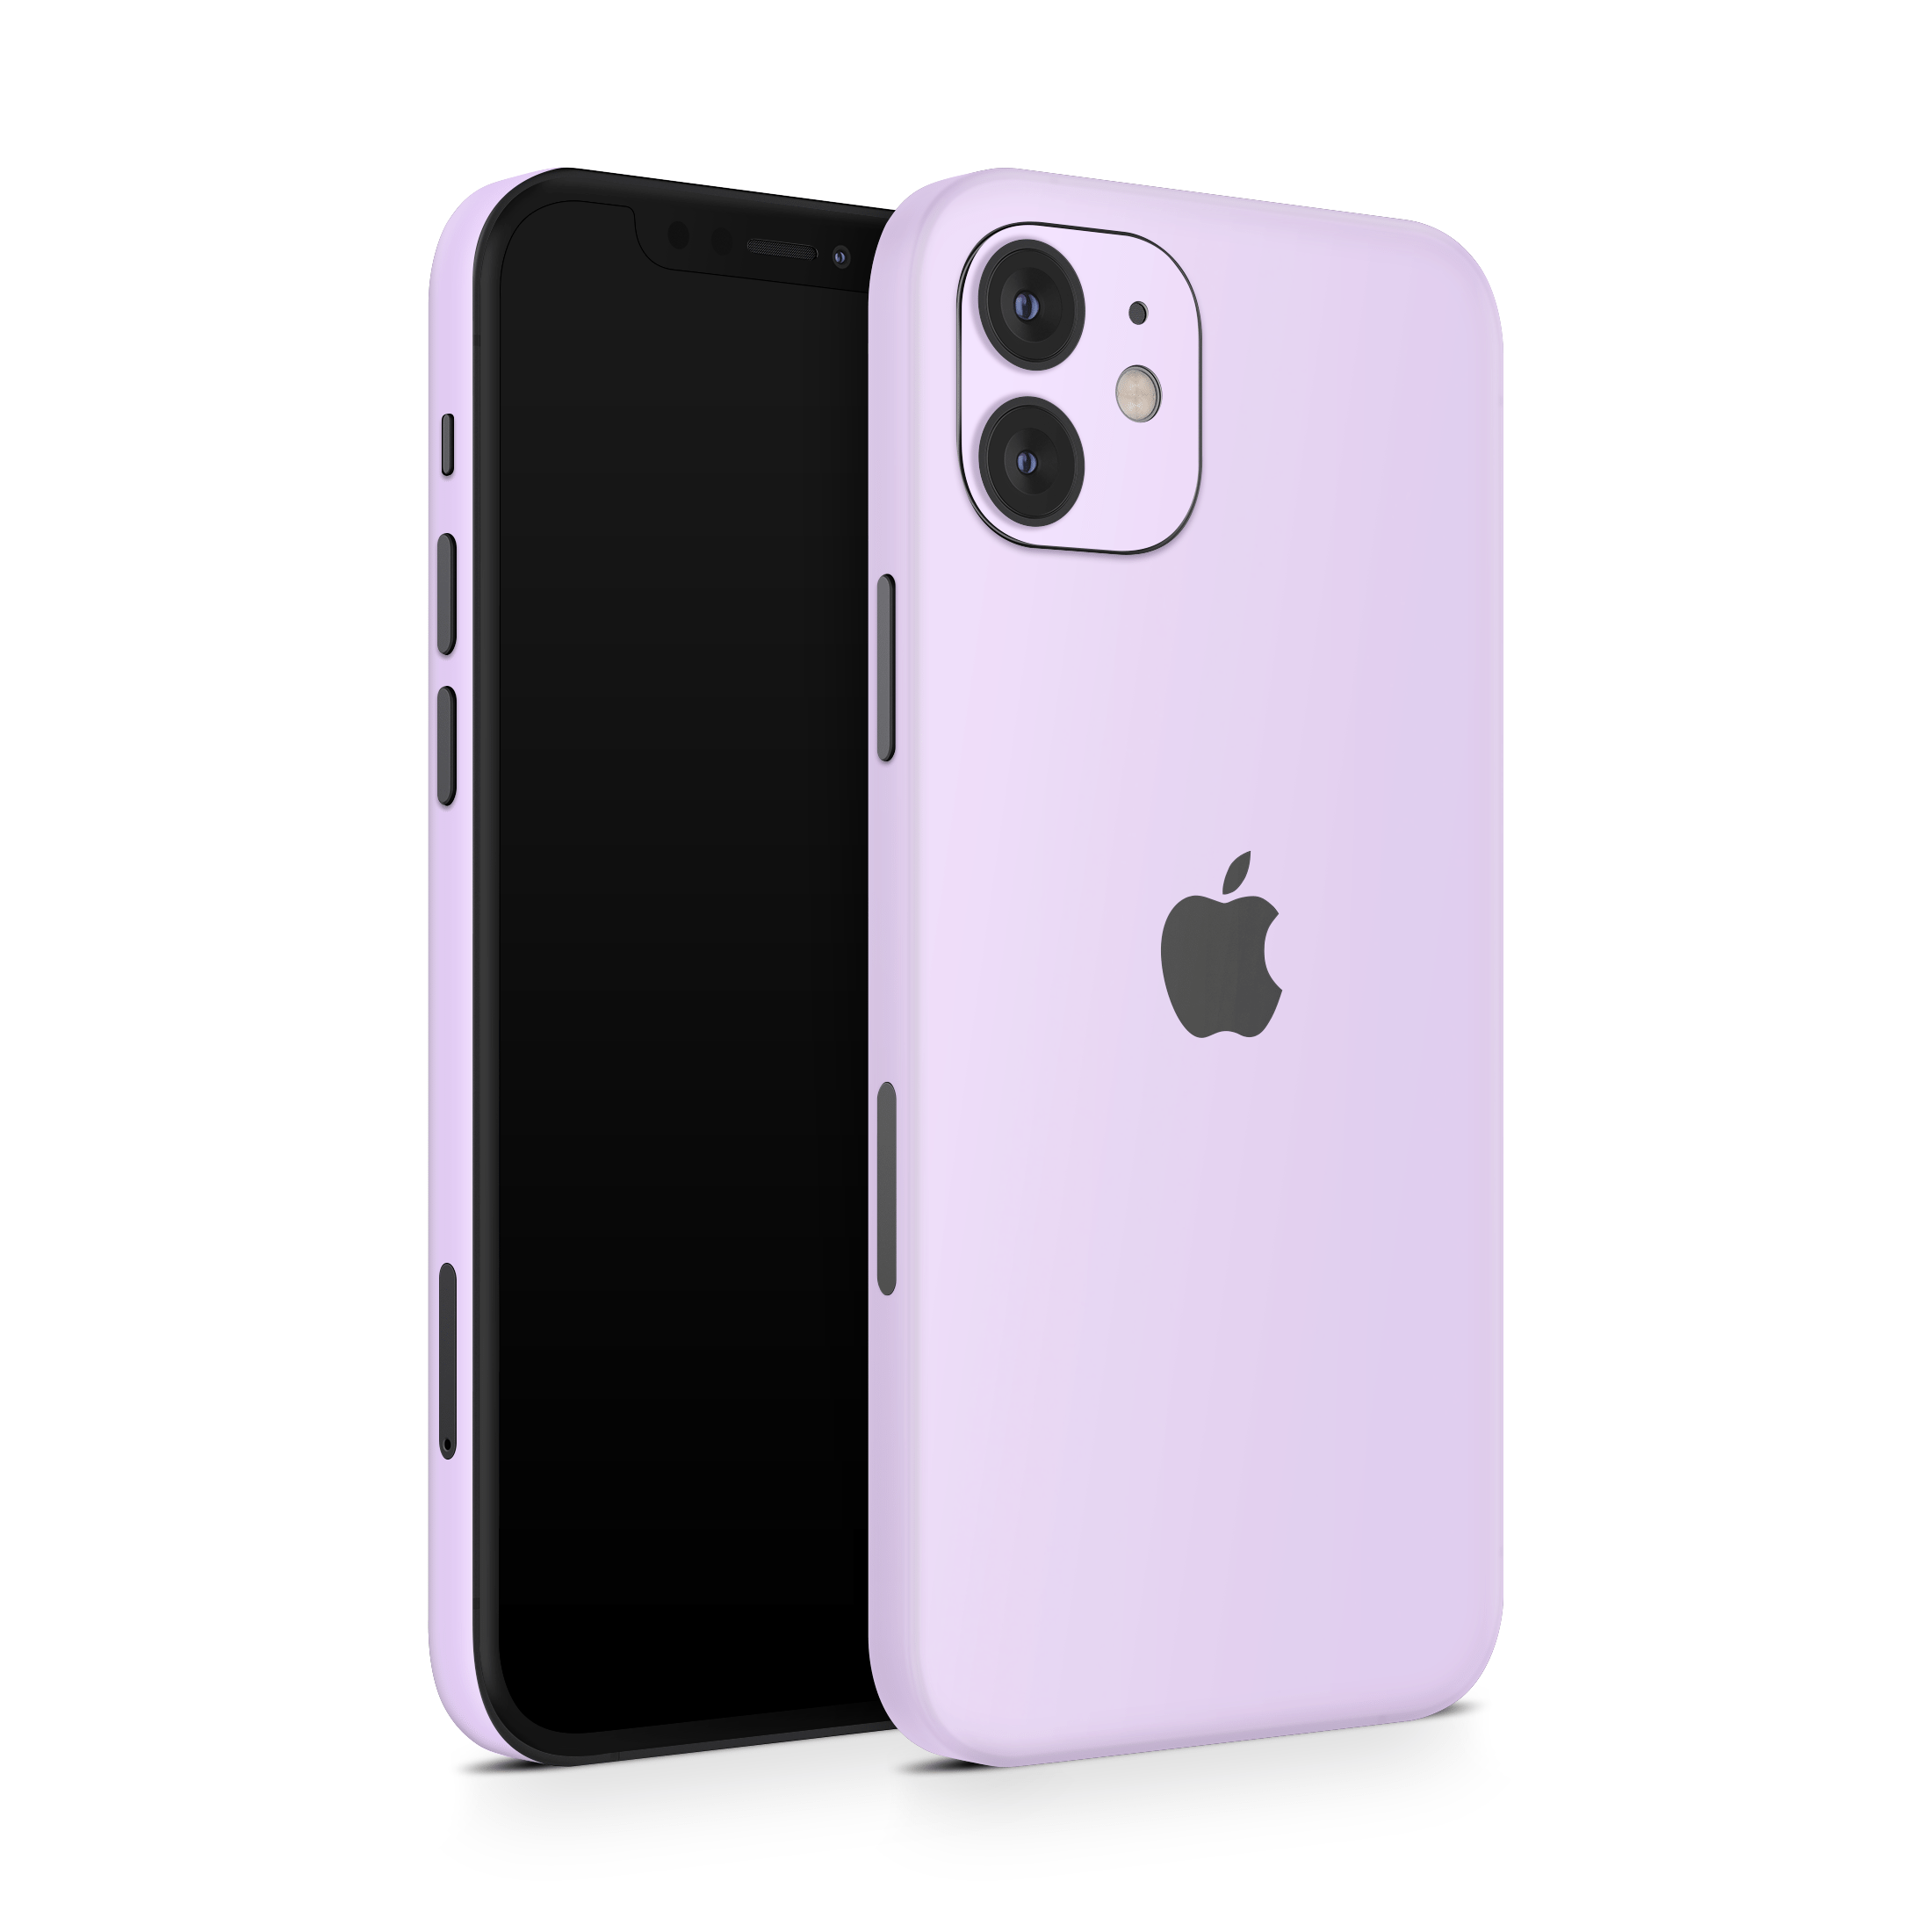 Pastel Lilac Apple iPhone Skins